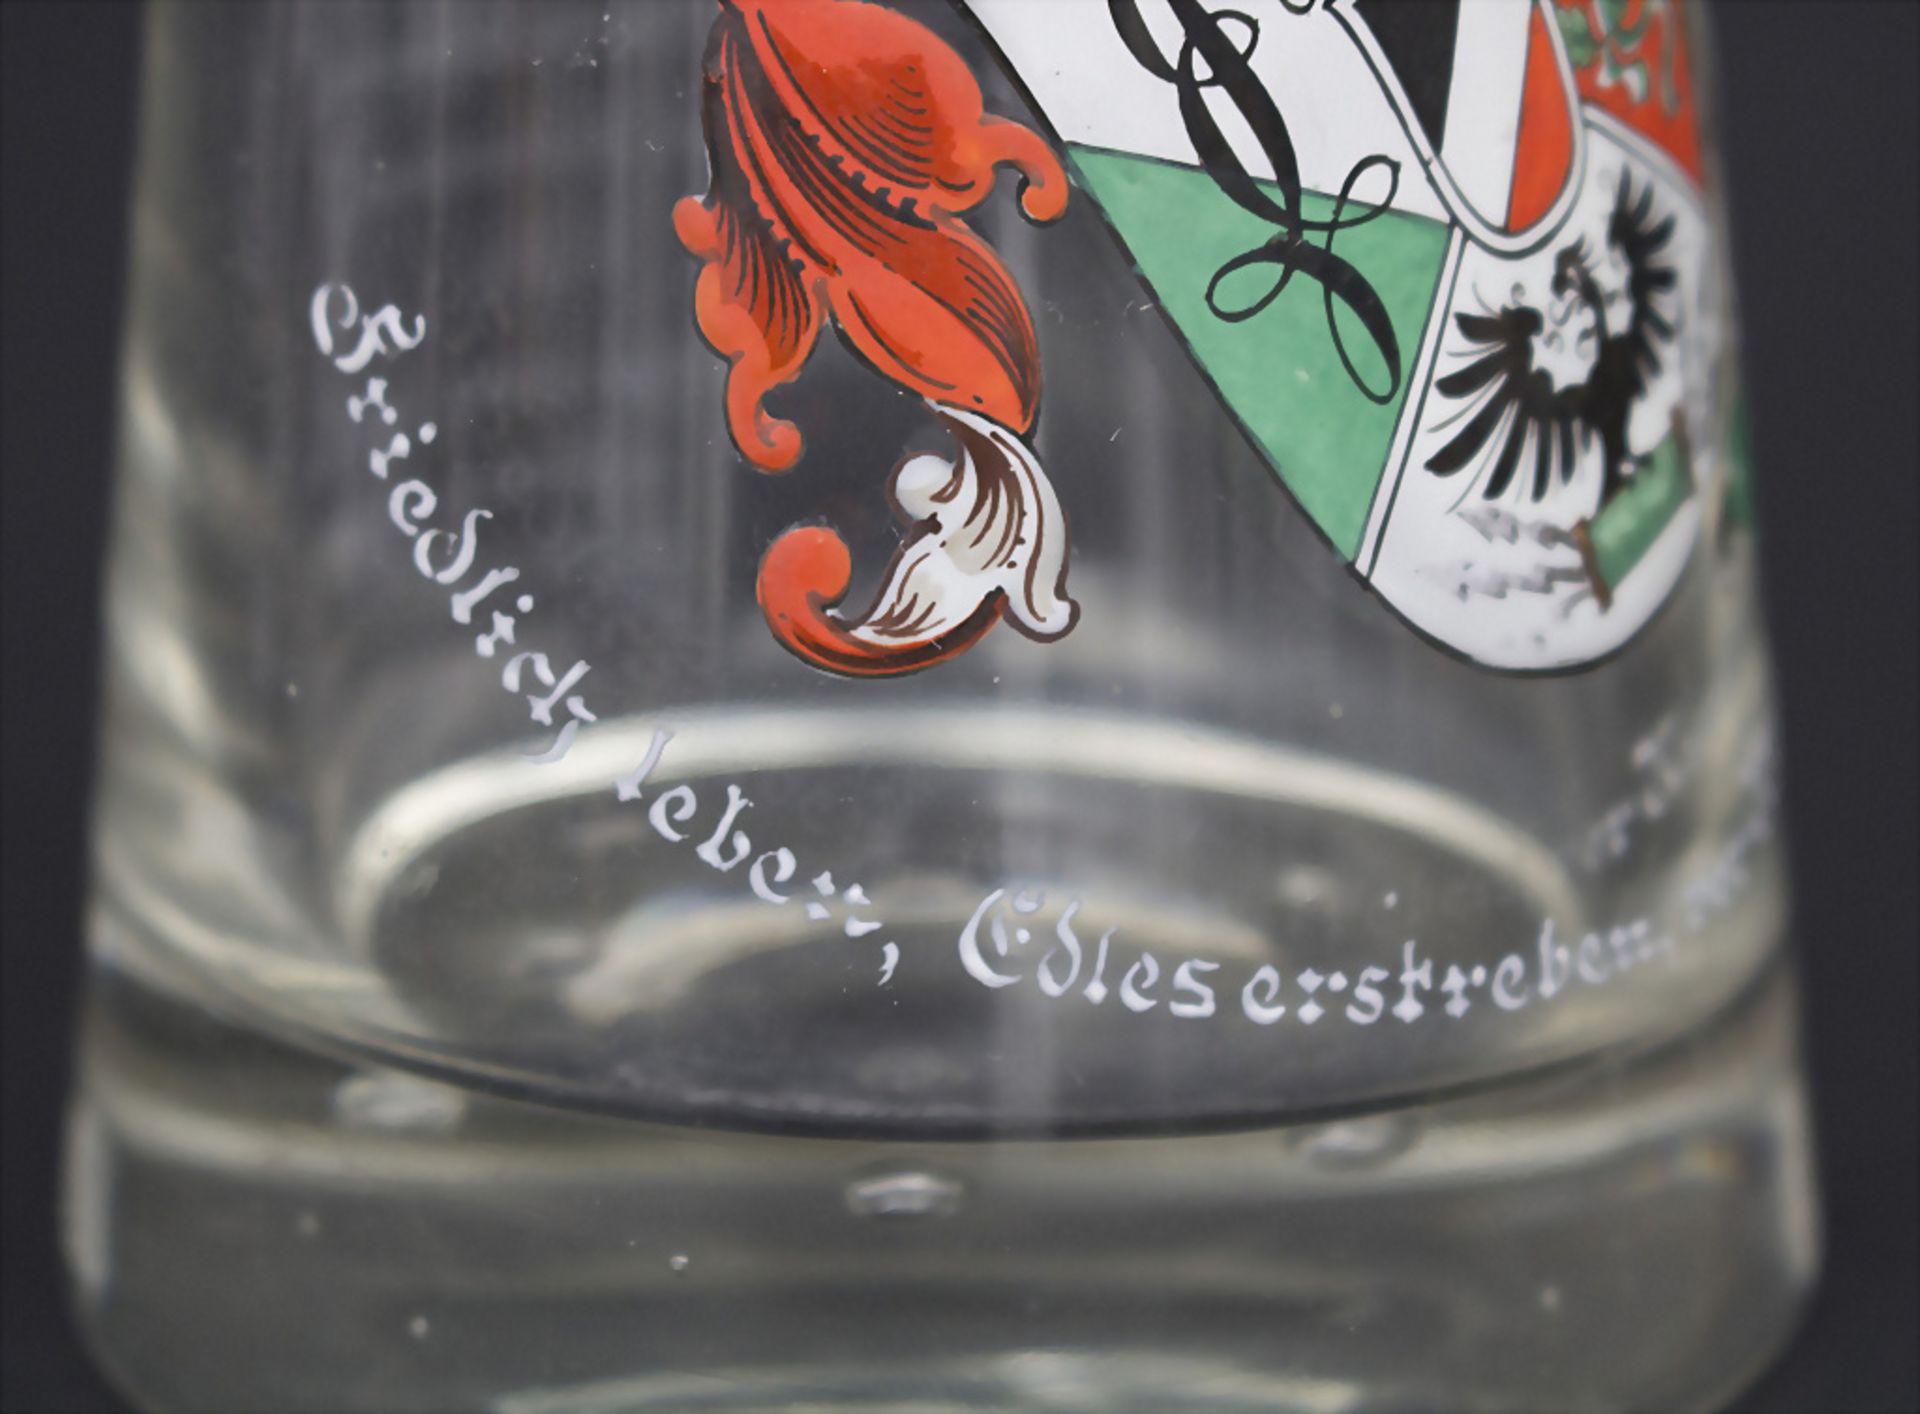 Burschenschaft-Schenkkrug / A fraternity glass jug, um 1903 - Image 6 of 9